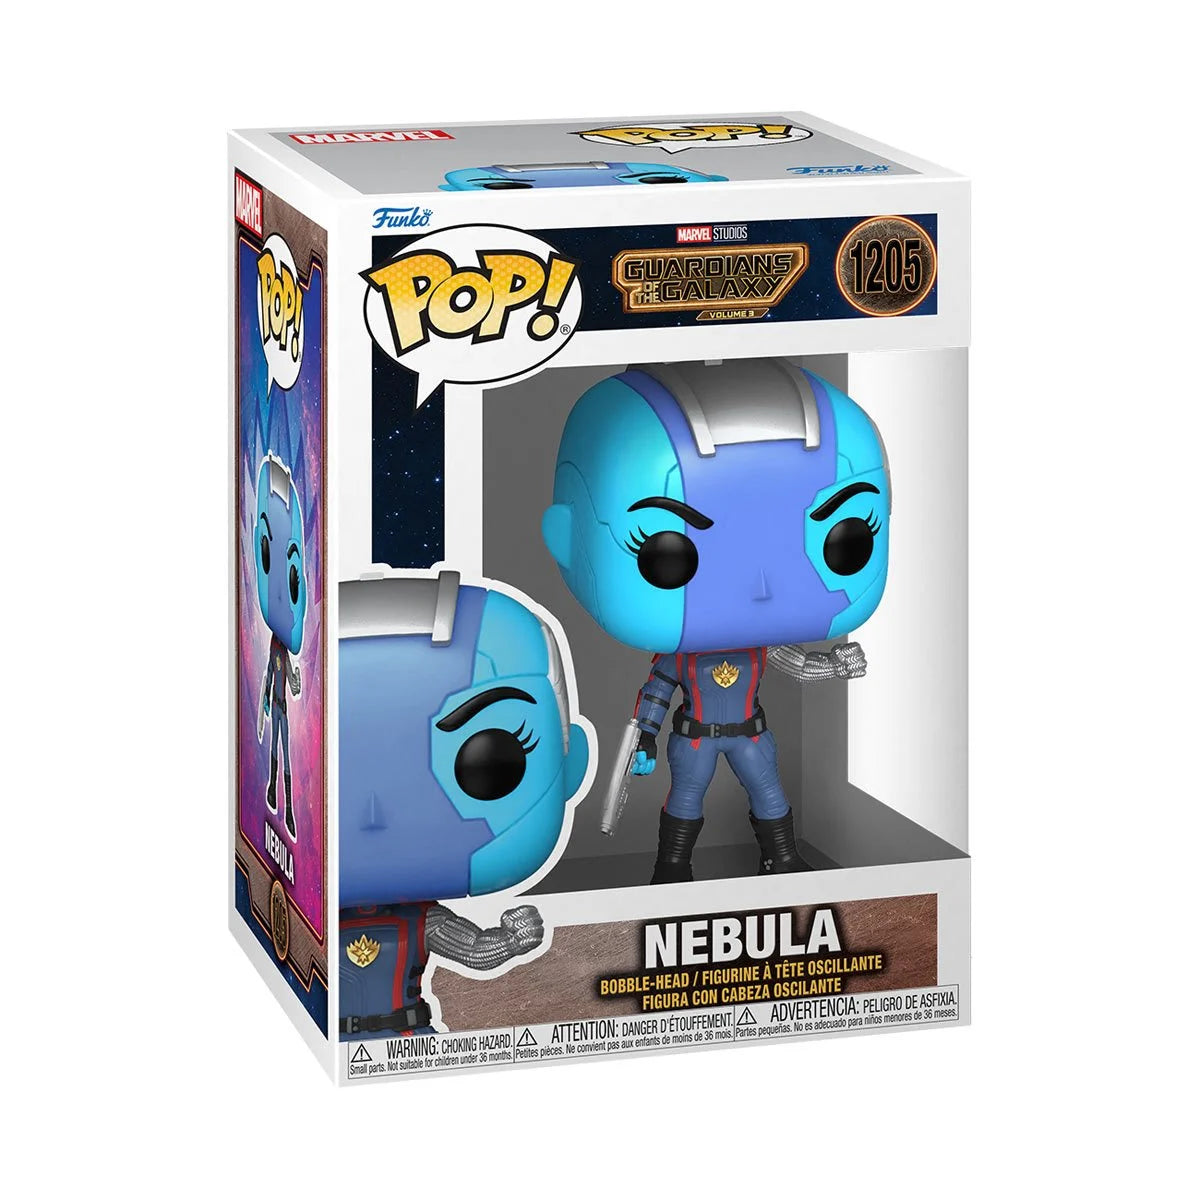 Nebula Guardians of the Galaxy Volume 3 Pop! Vinyl Figure